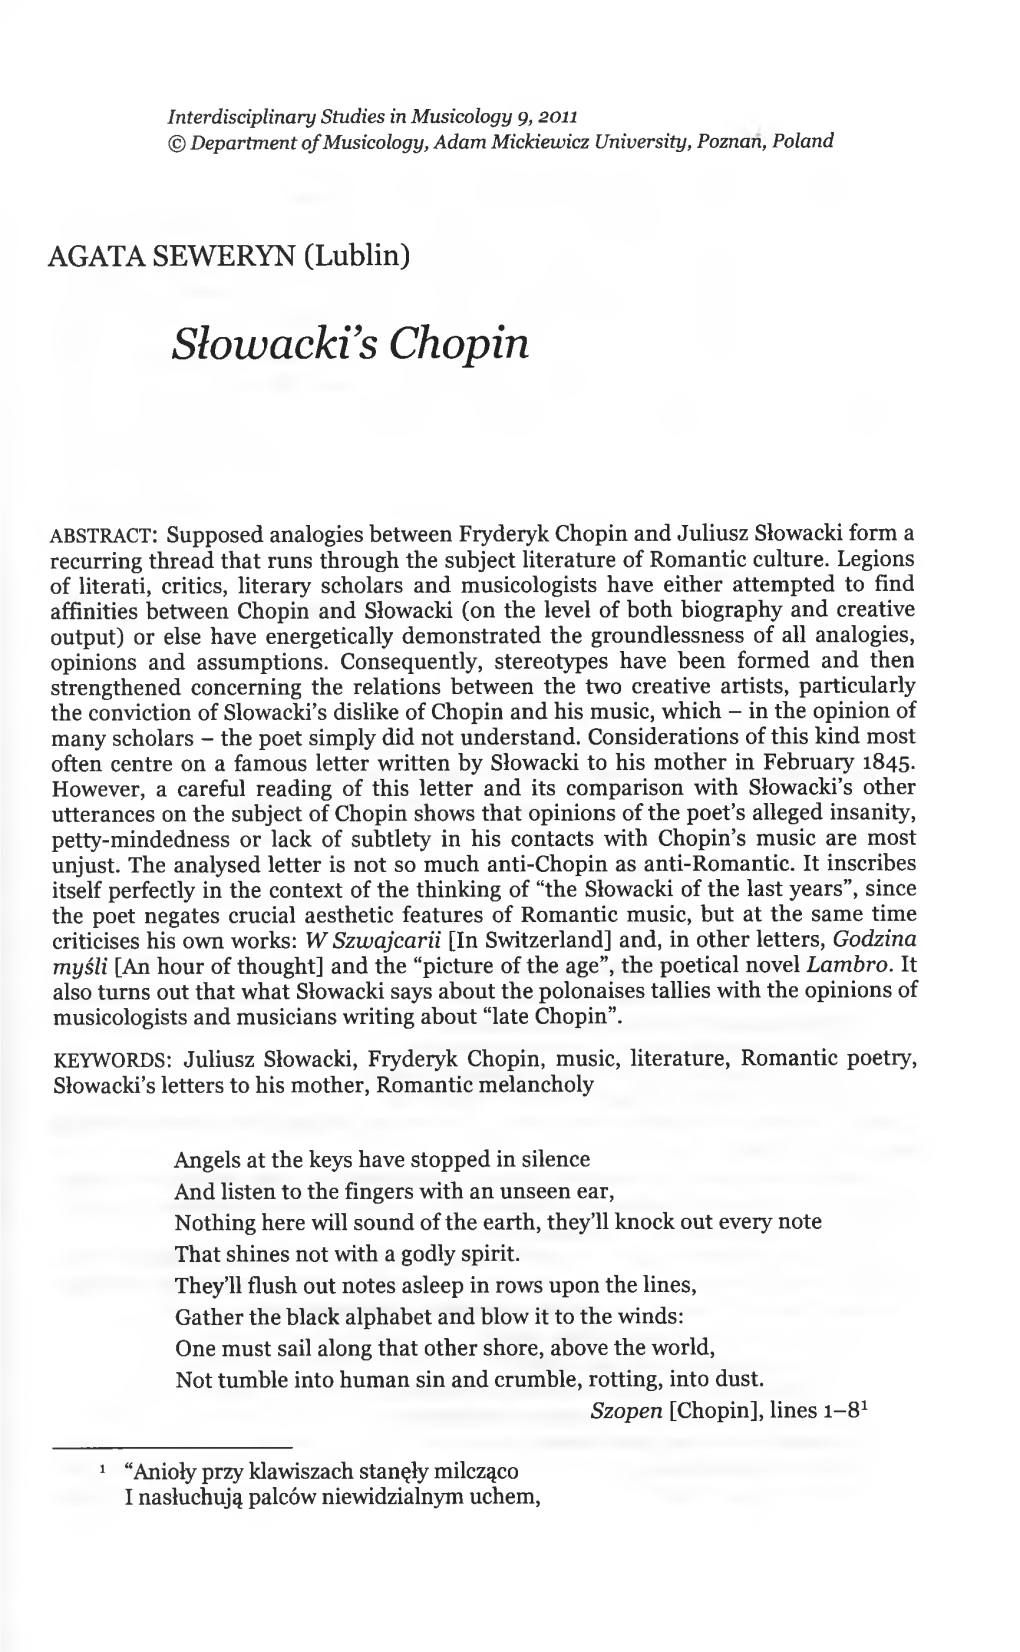 Slowacki's Chopin